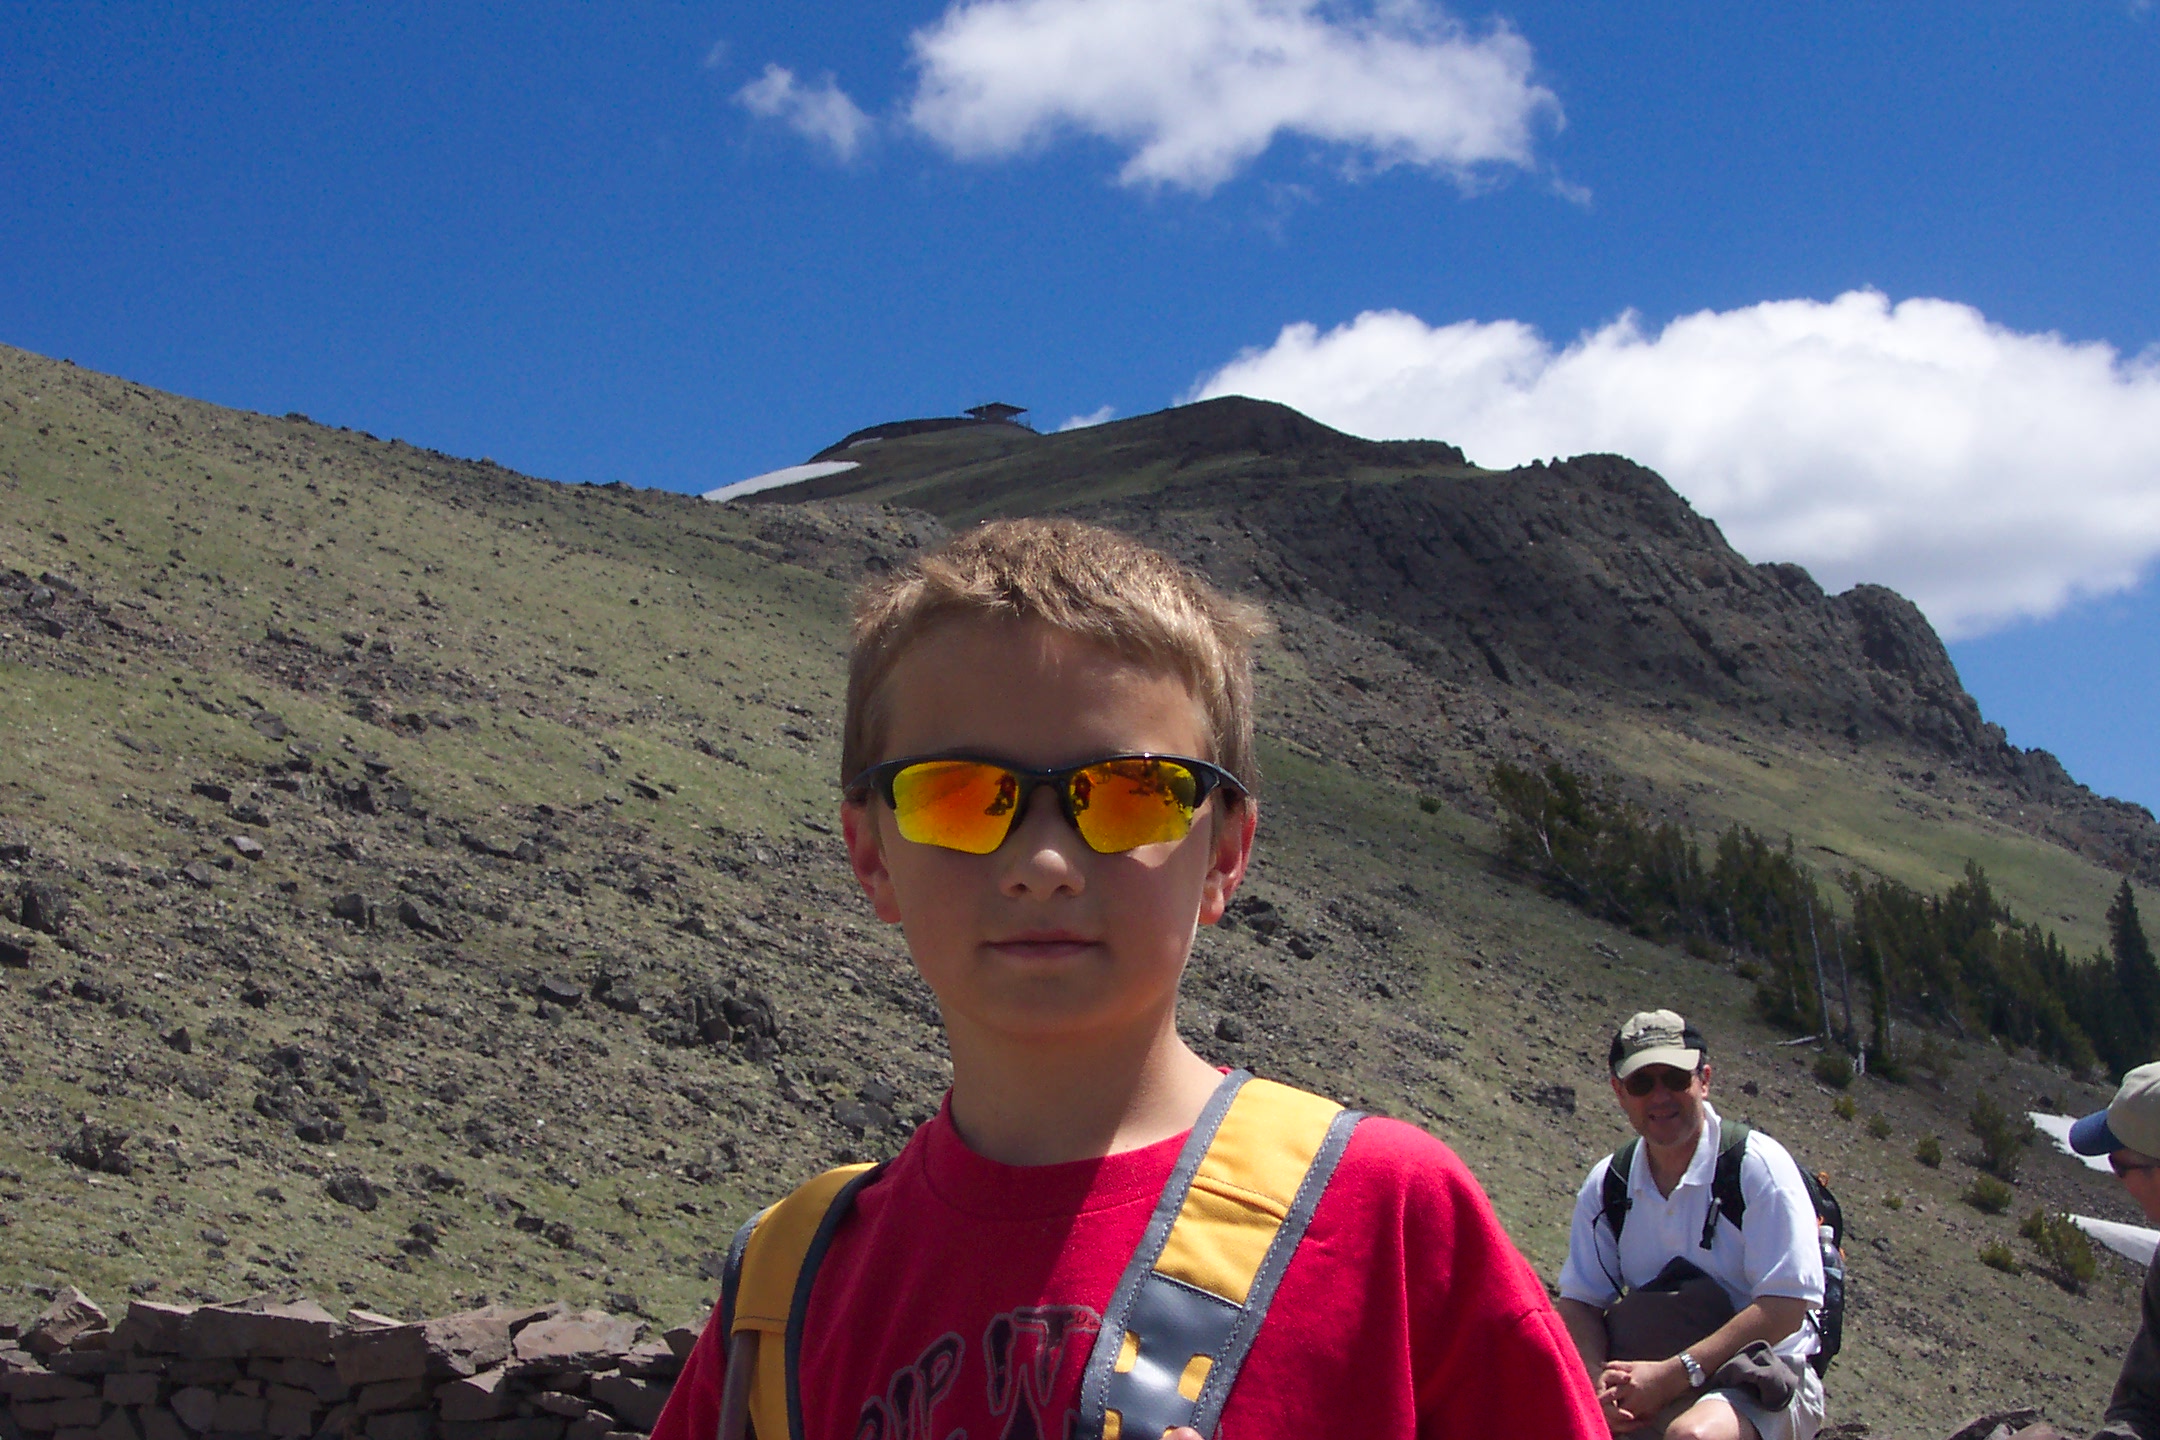 Jacob climbing Mount Washburn in Yellowstone National Park